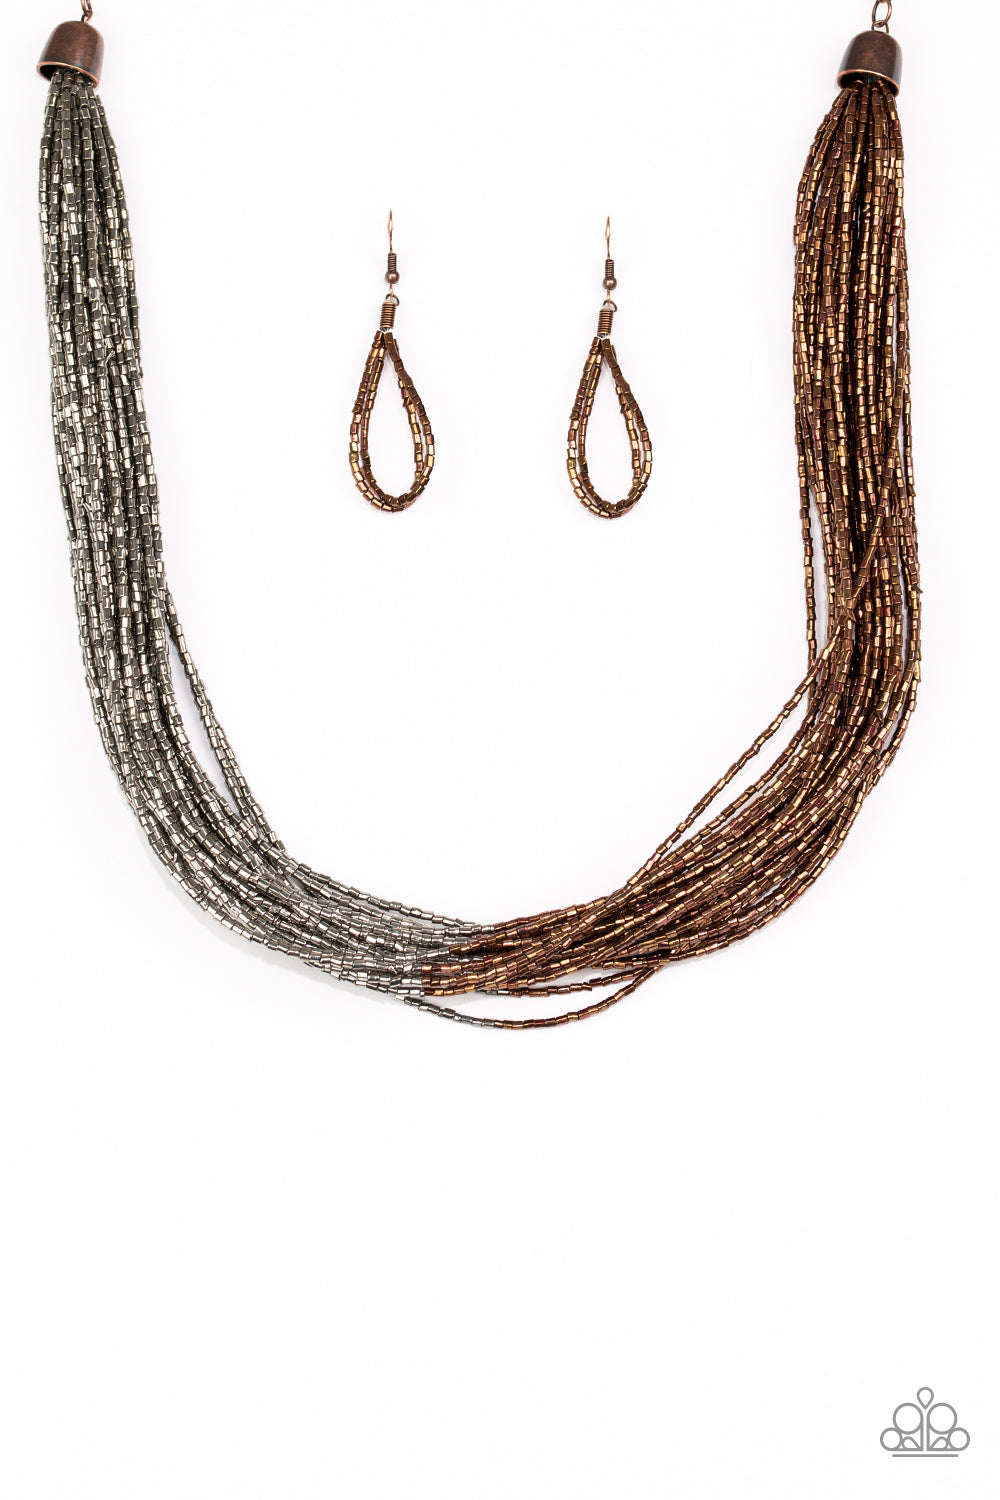 Flashy Fashion - Copper Necklace freeshipping - JewLz4u Gemstone Gallery